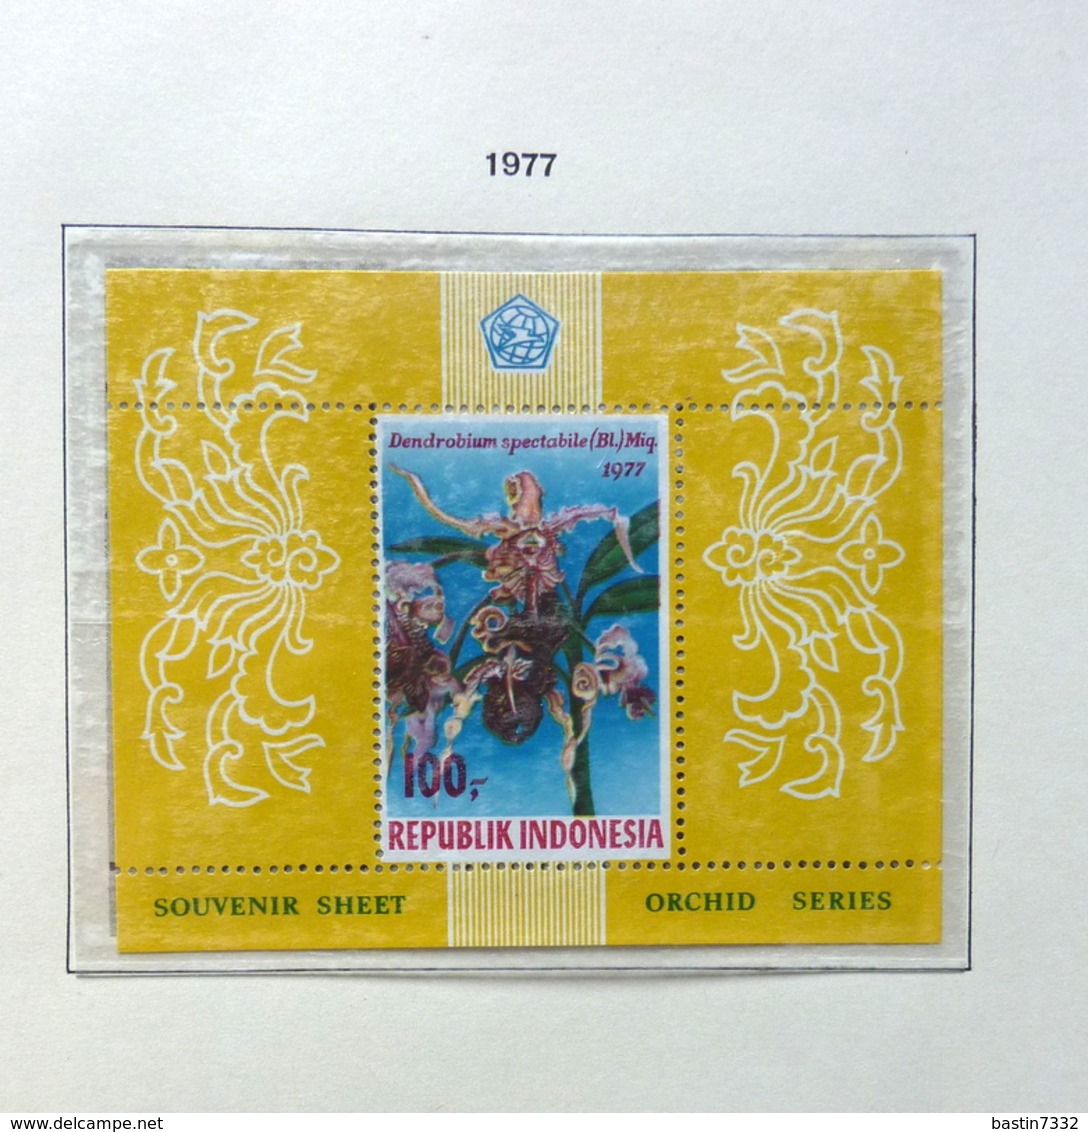 Indonesia/Indonesië collection in Schaubek album